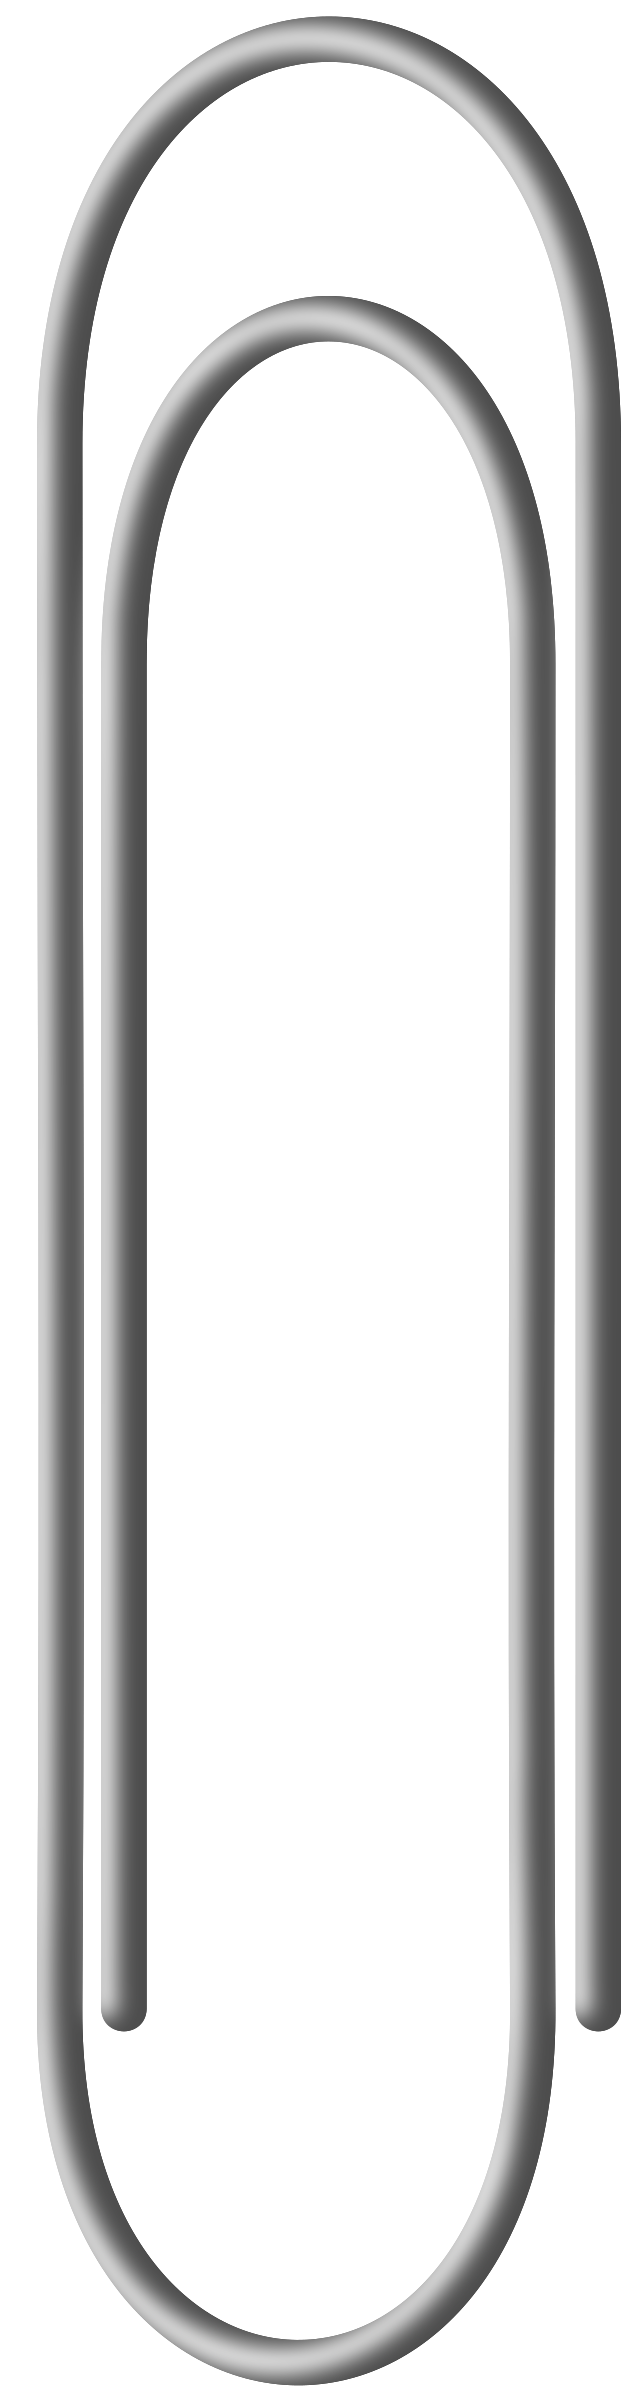 A Black Screen With A Rectangular Frame